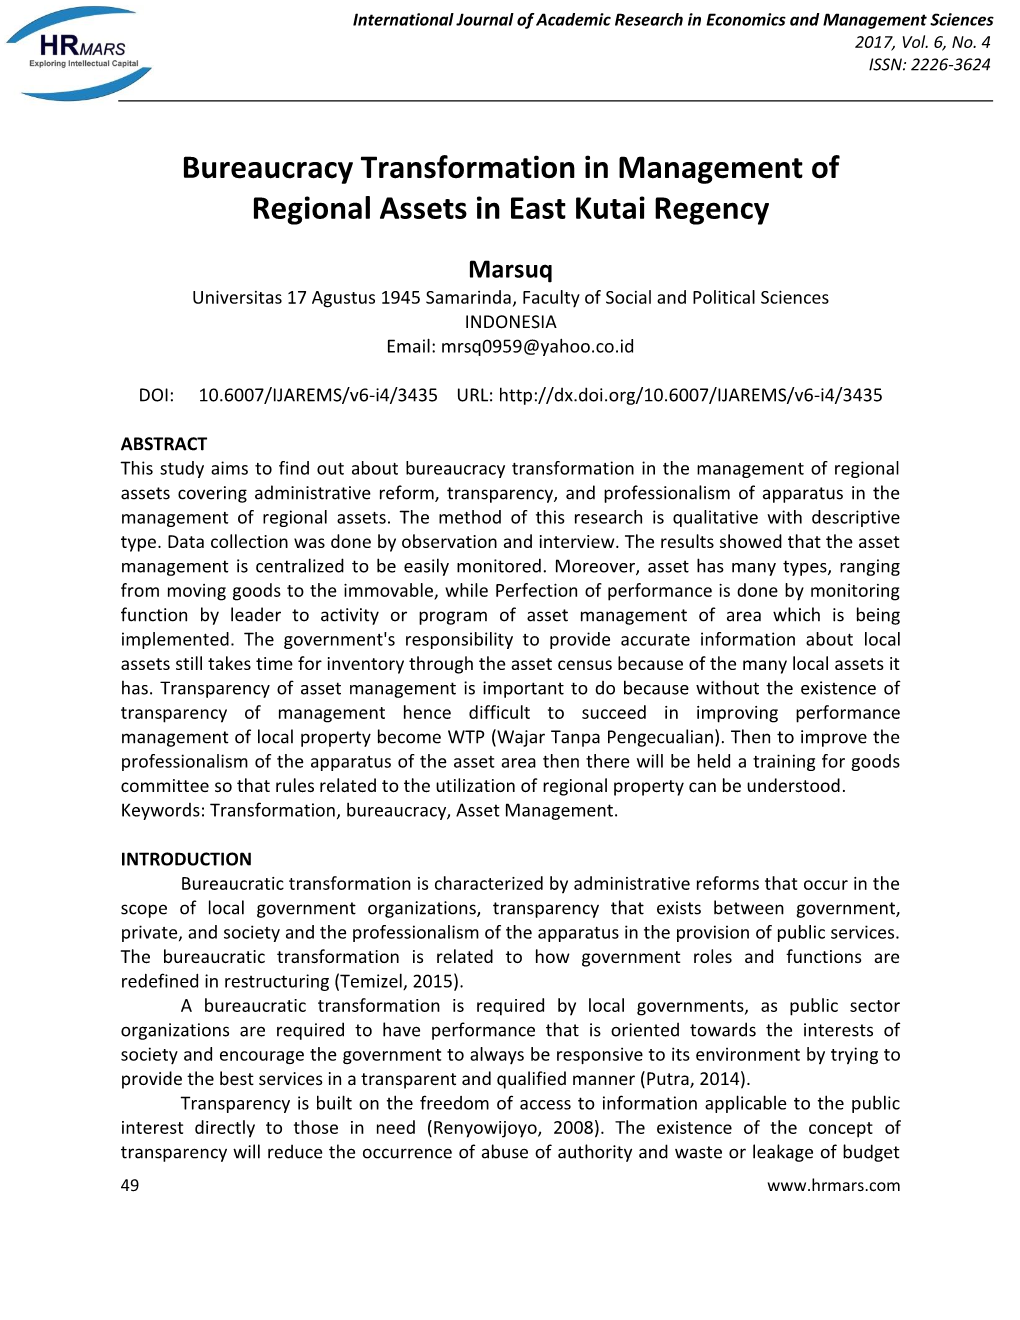 Bureaucracy Transformation in Management of Regional Assets in East Kutai Regency